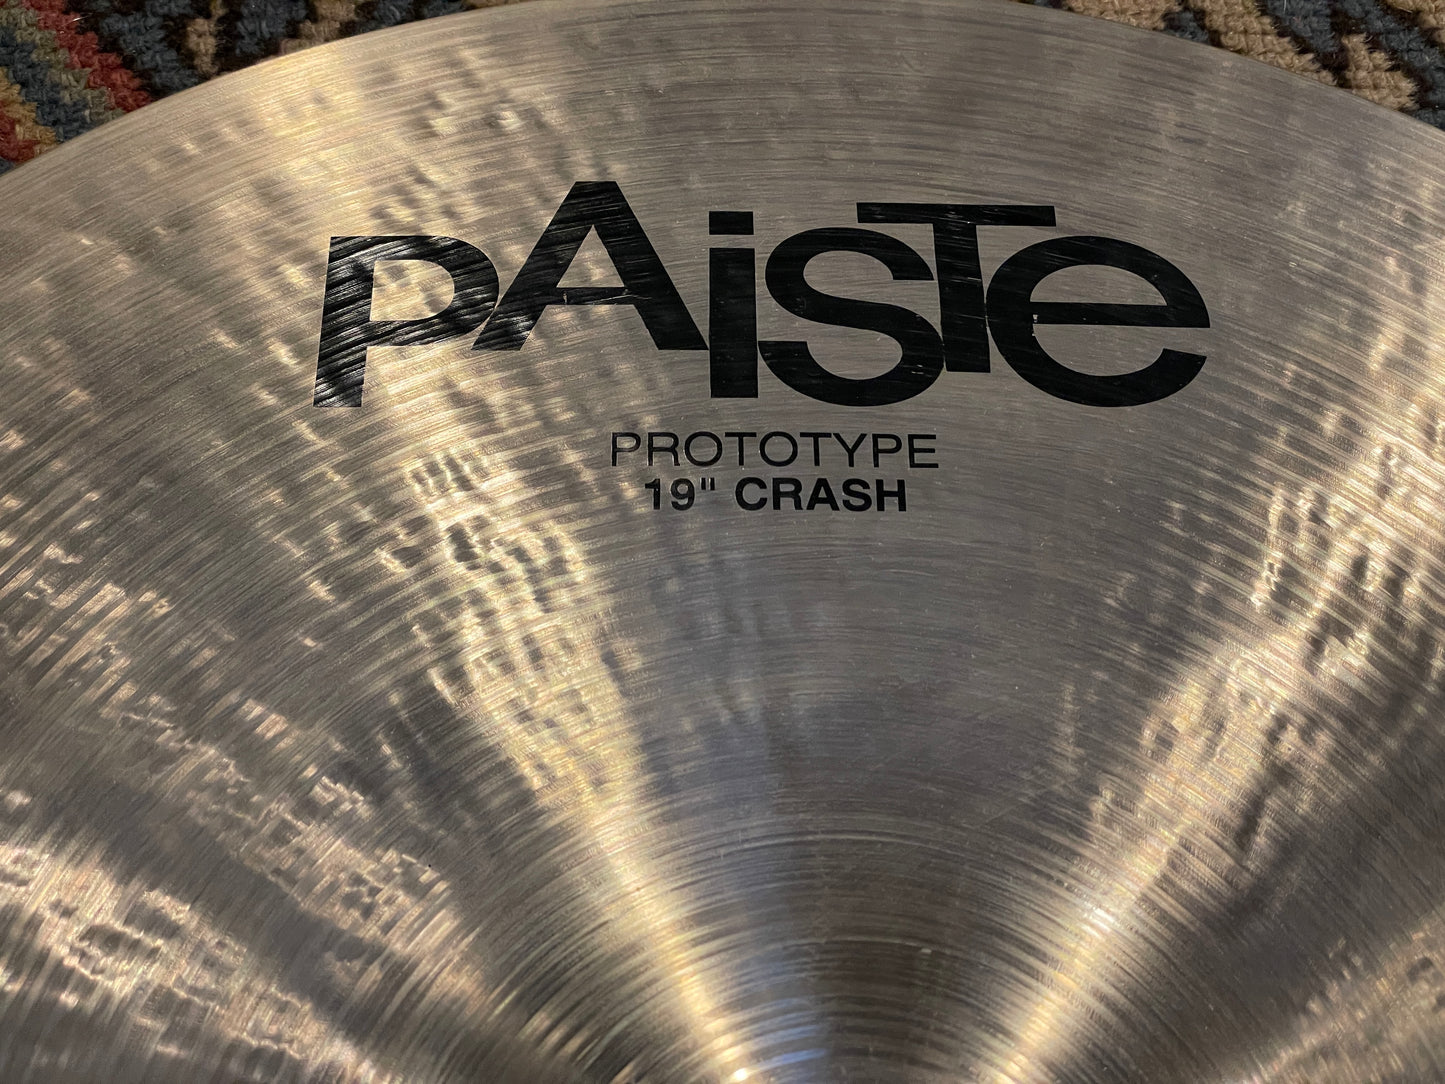 19" Paiste T20 Prototype Crash Cymbal 2374g